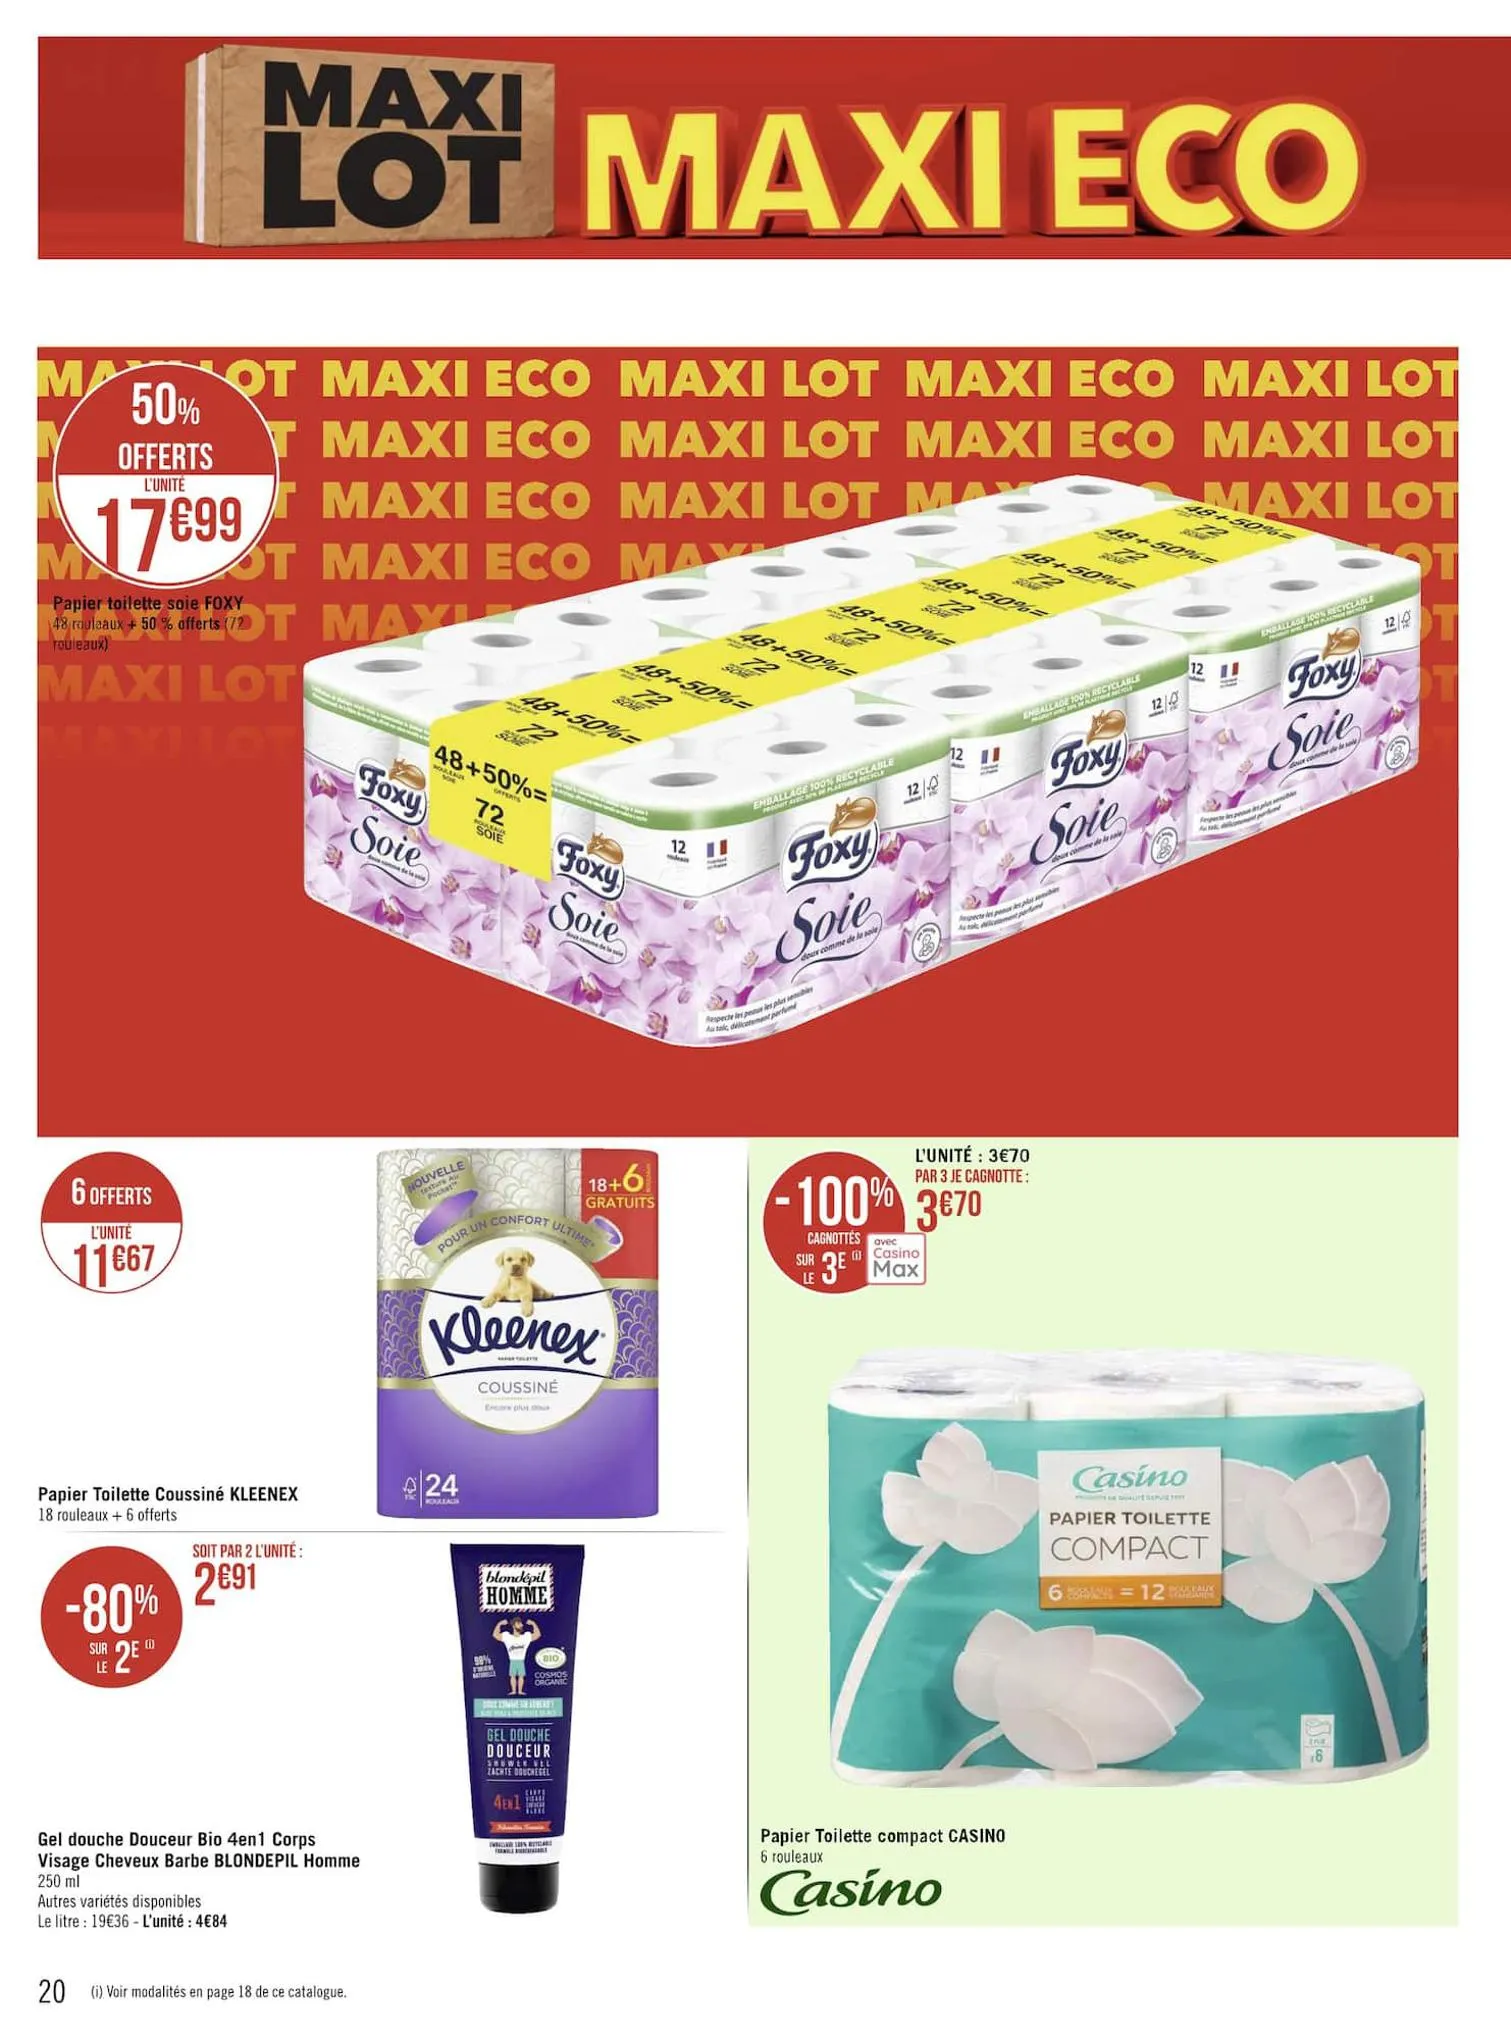 Catalogue Maxi lot, maxi eco, page 00020